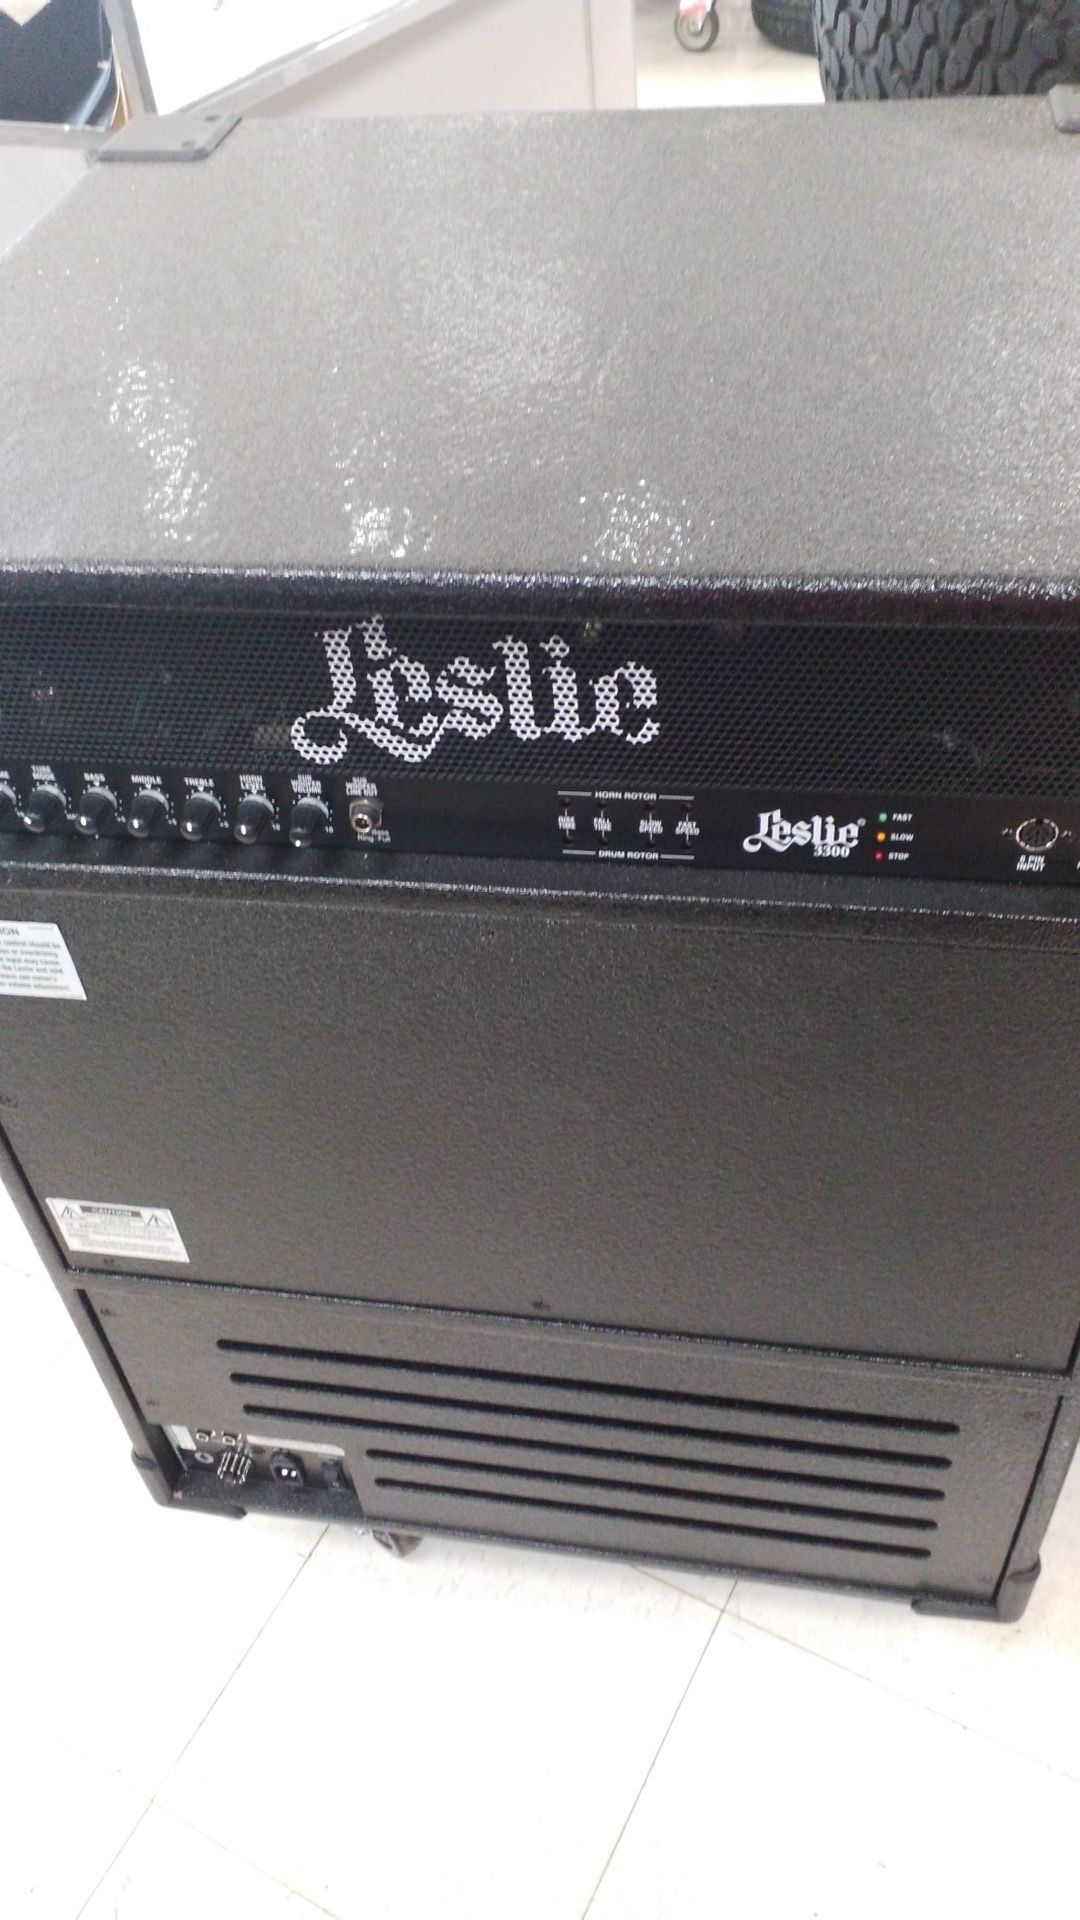 Leslie Amplifiers